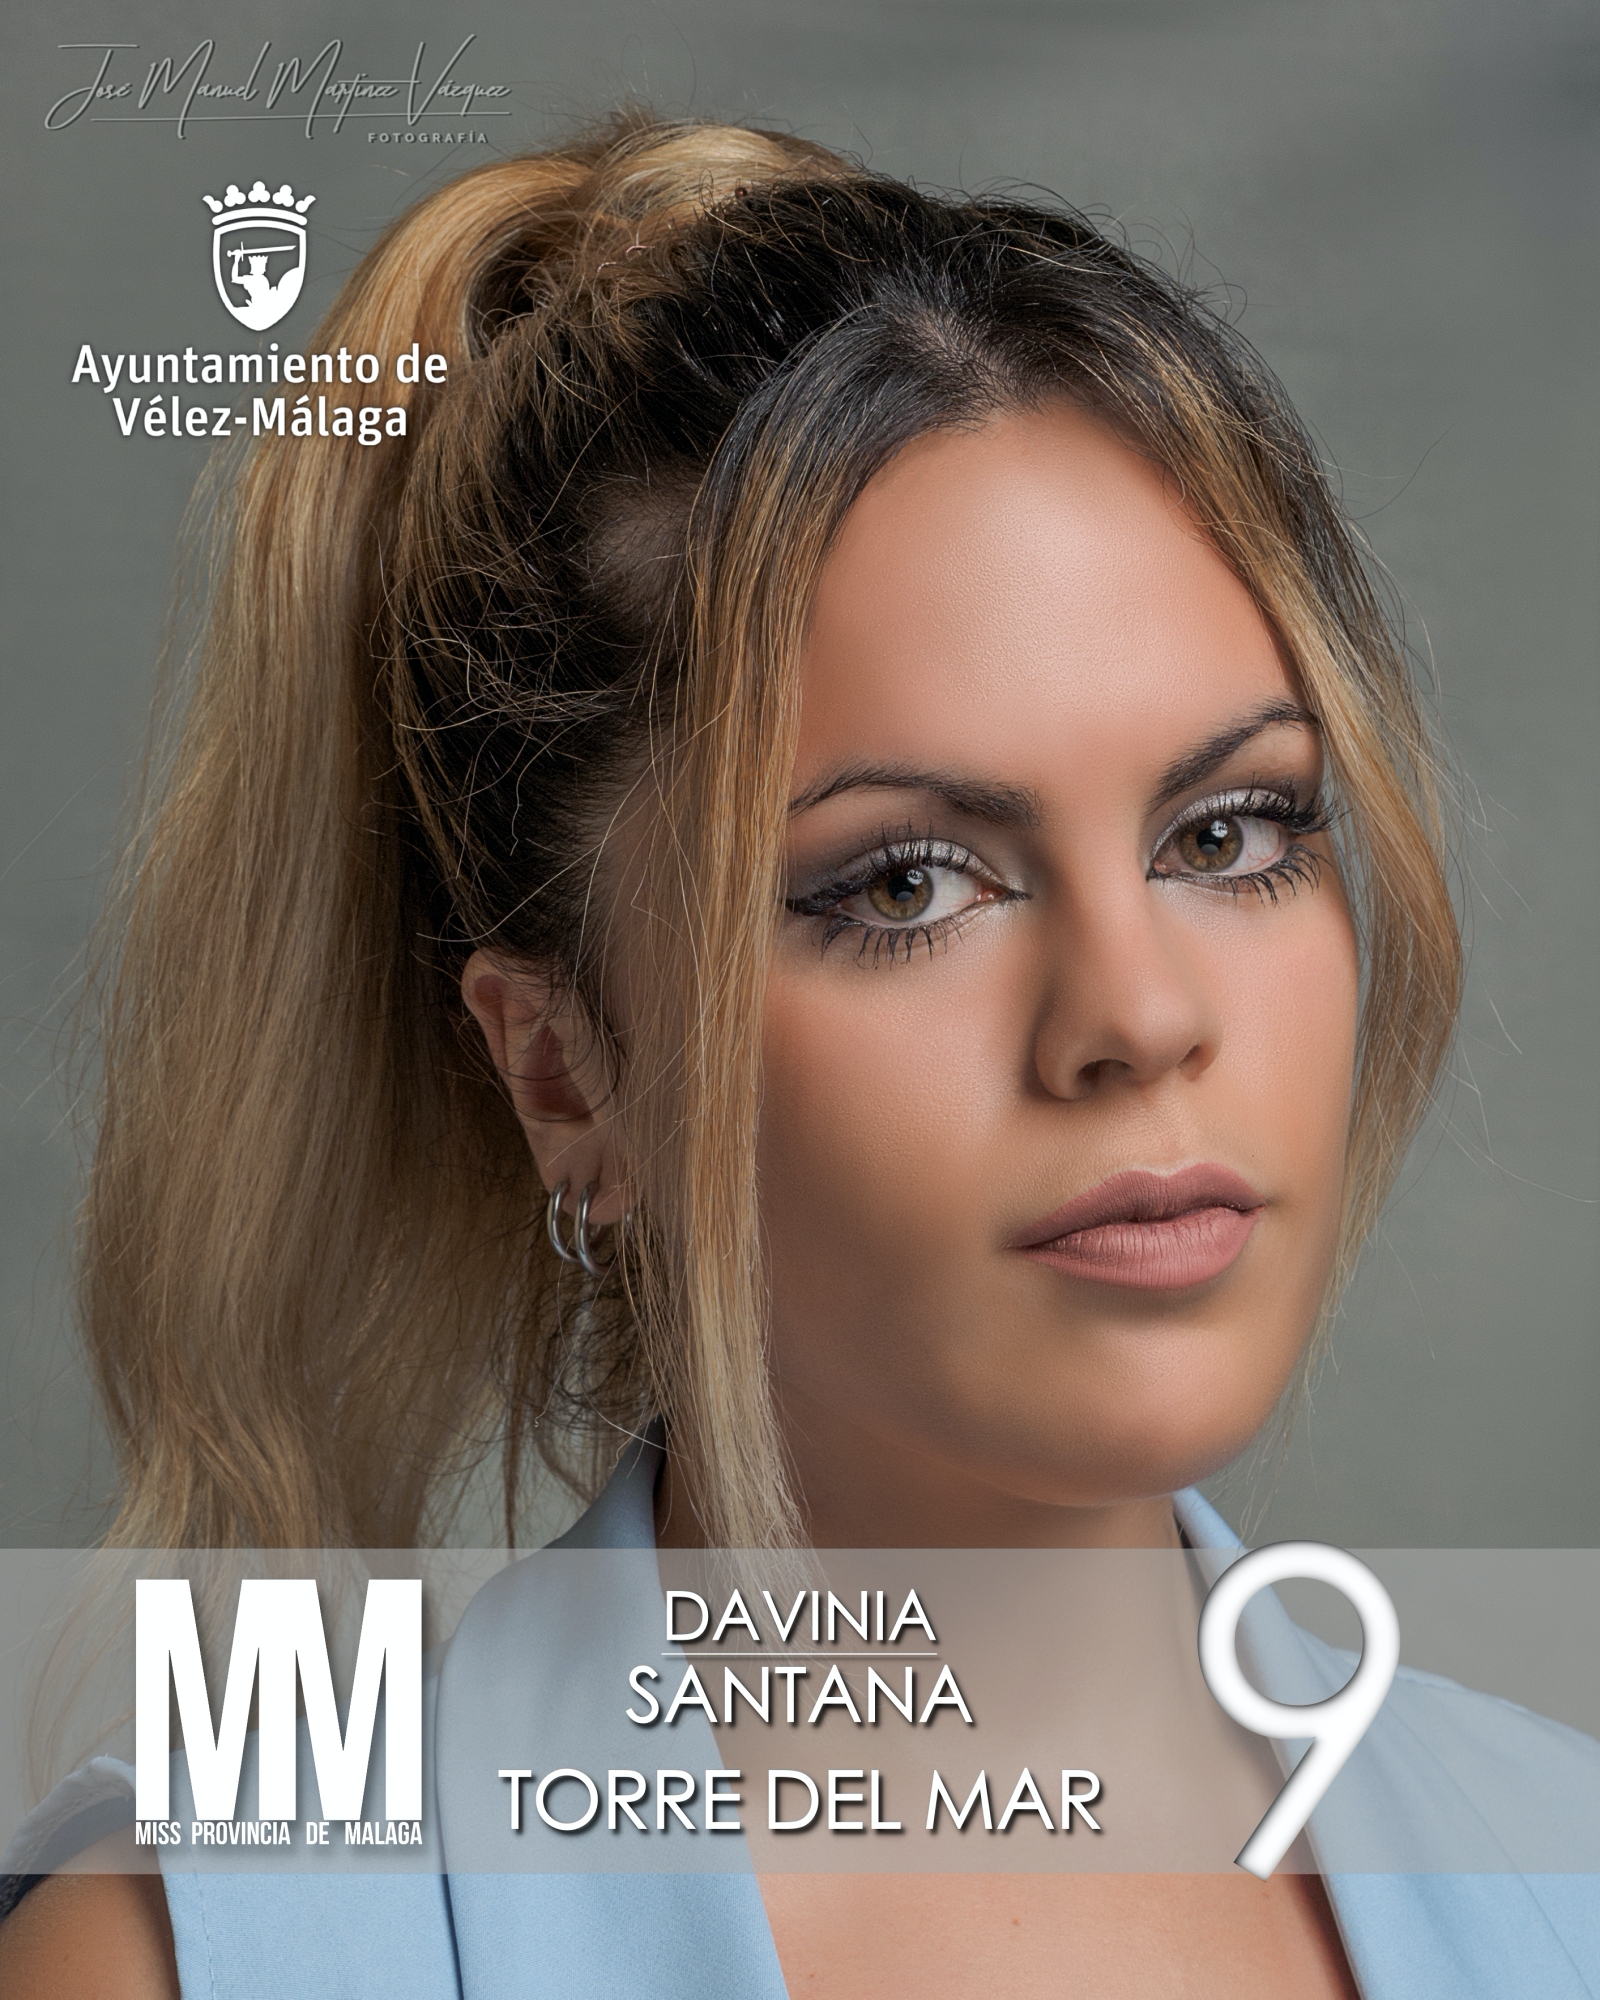 9 Davinia Santana Torre del Mar Miss Velez Malaga 2022 Miss Provincia de Malaga